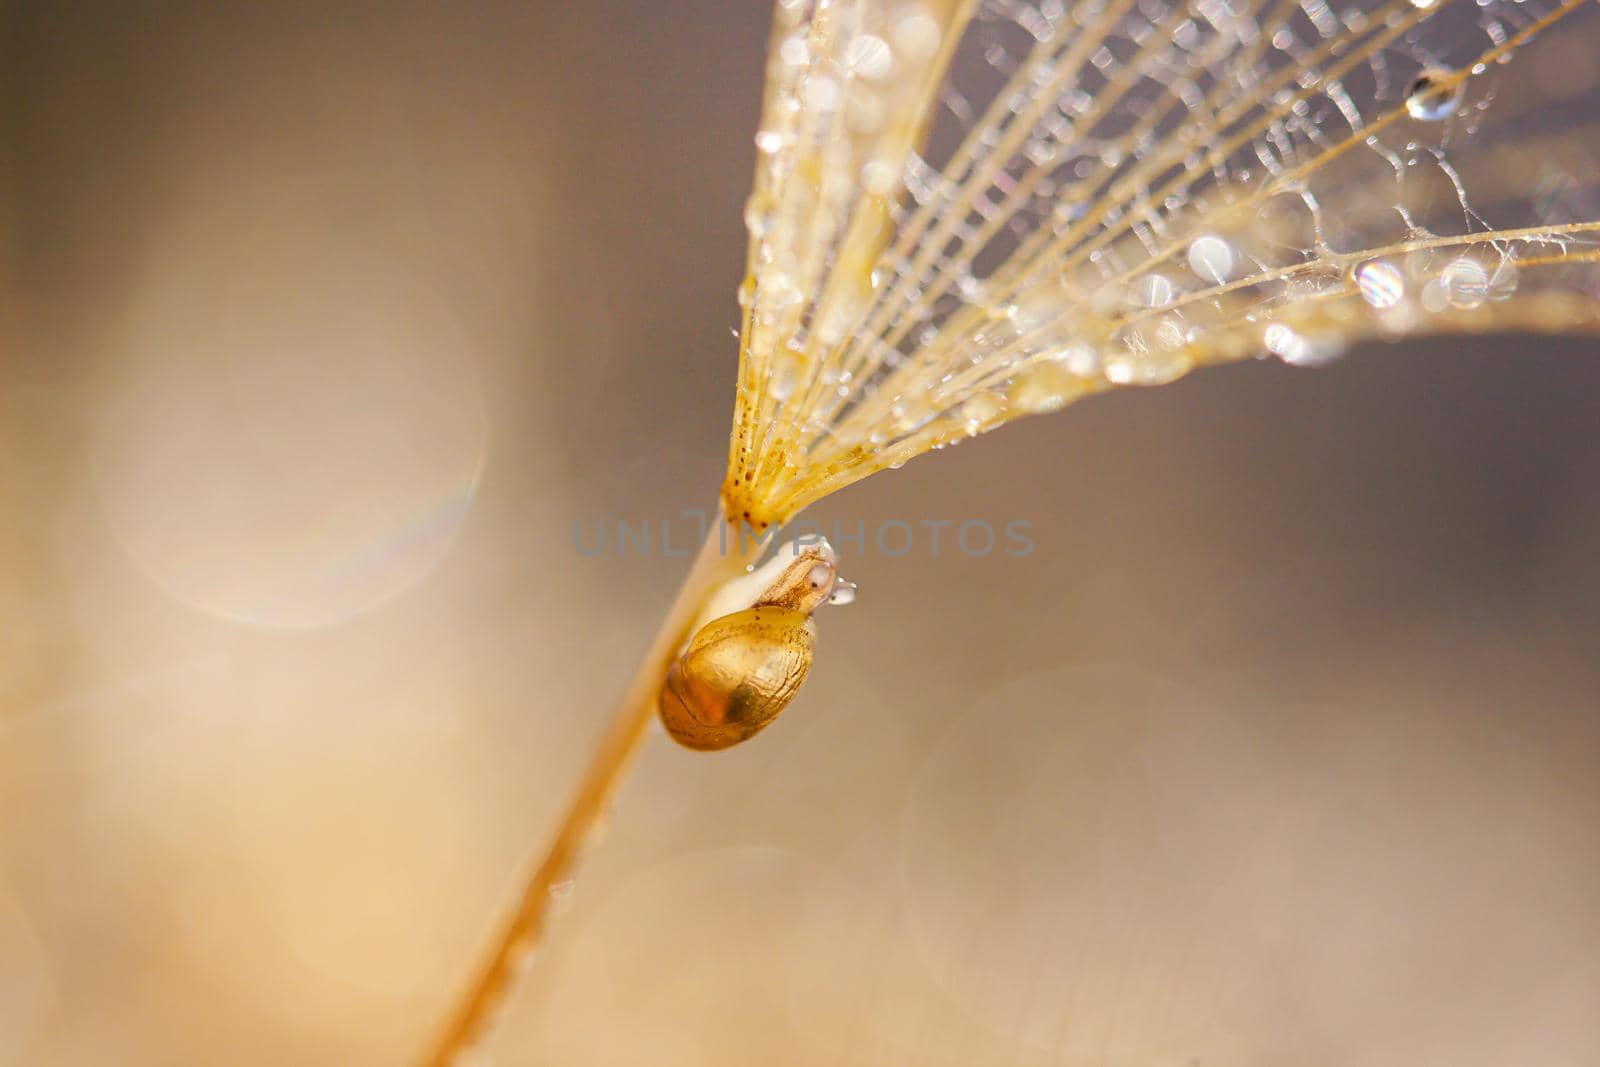 Little snail on dandelion flower. Nature background with dandelion.